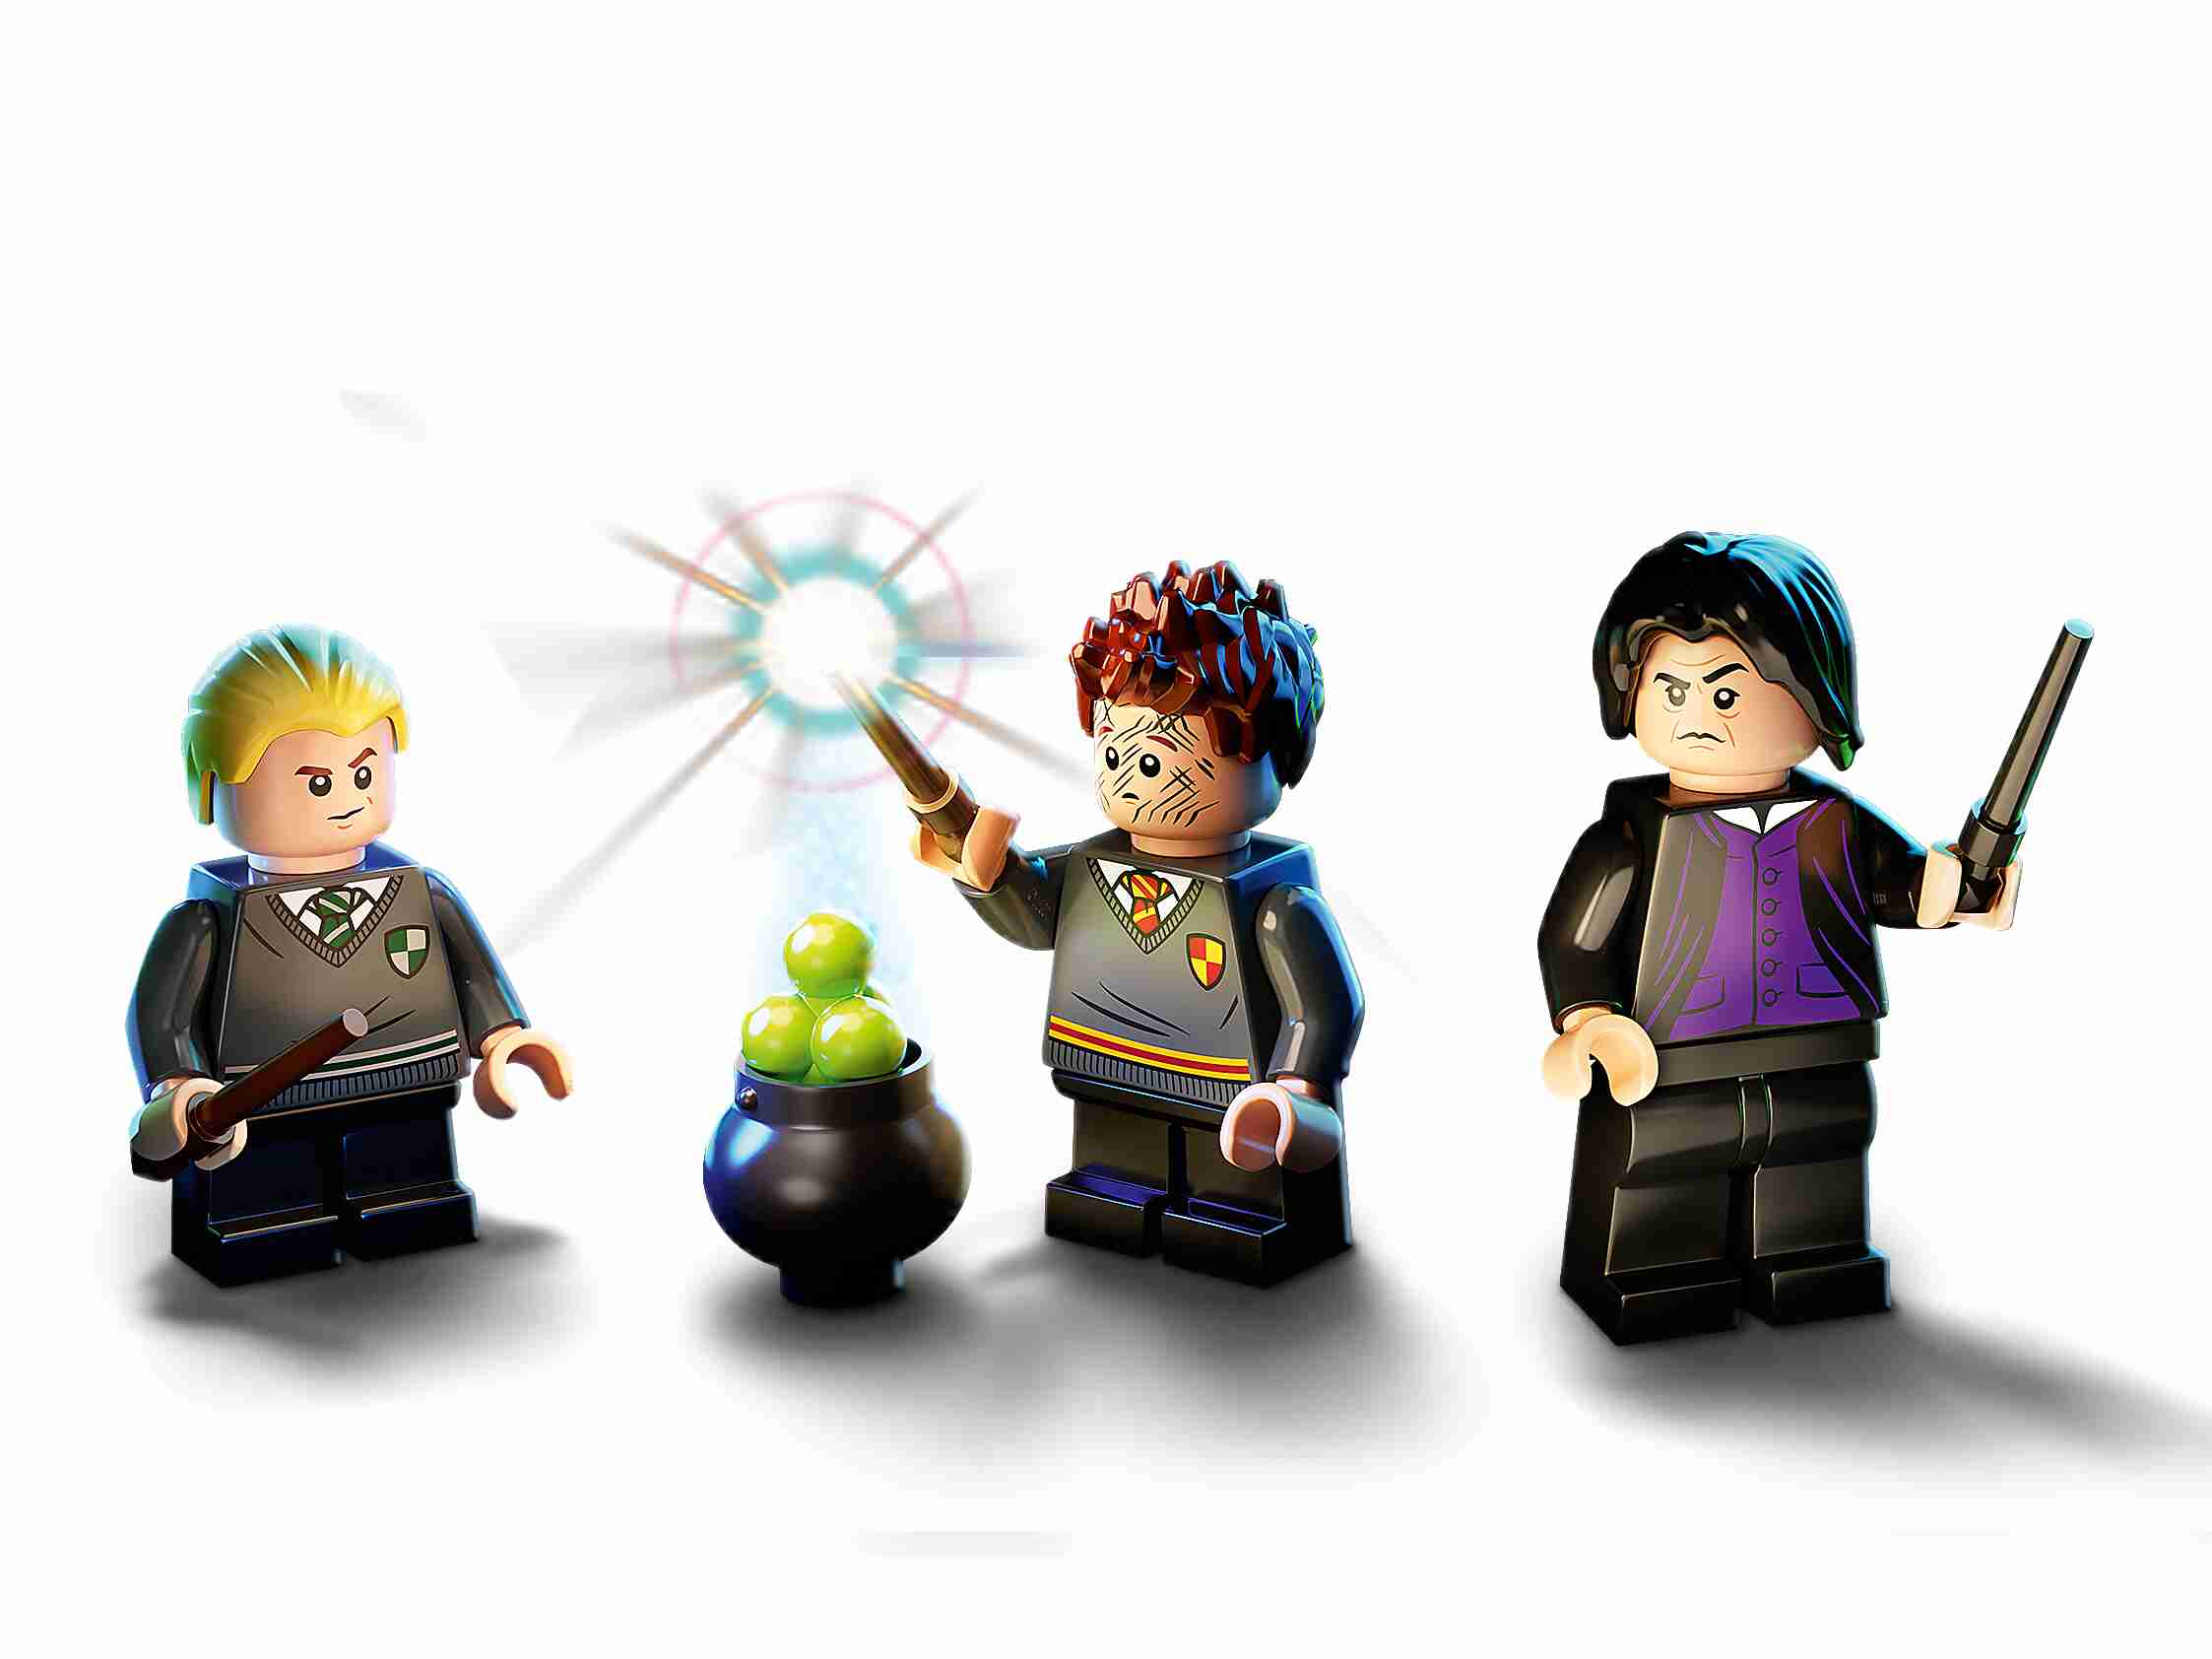 LEGO 76383 Harry Potter Hogwarts Moment: Zaubertrankunterricht